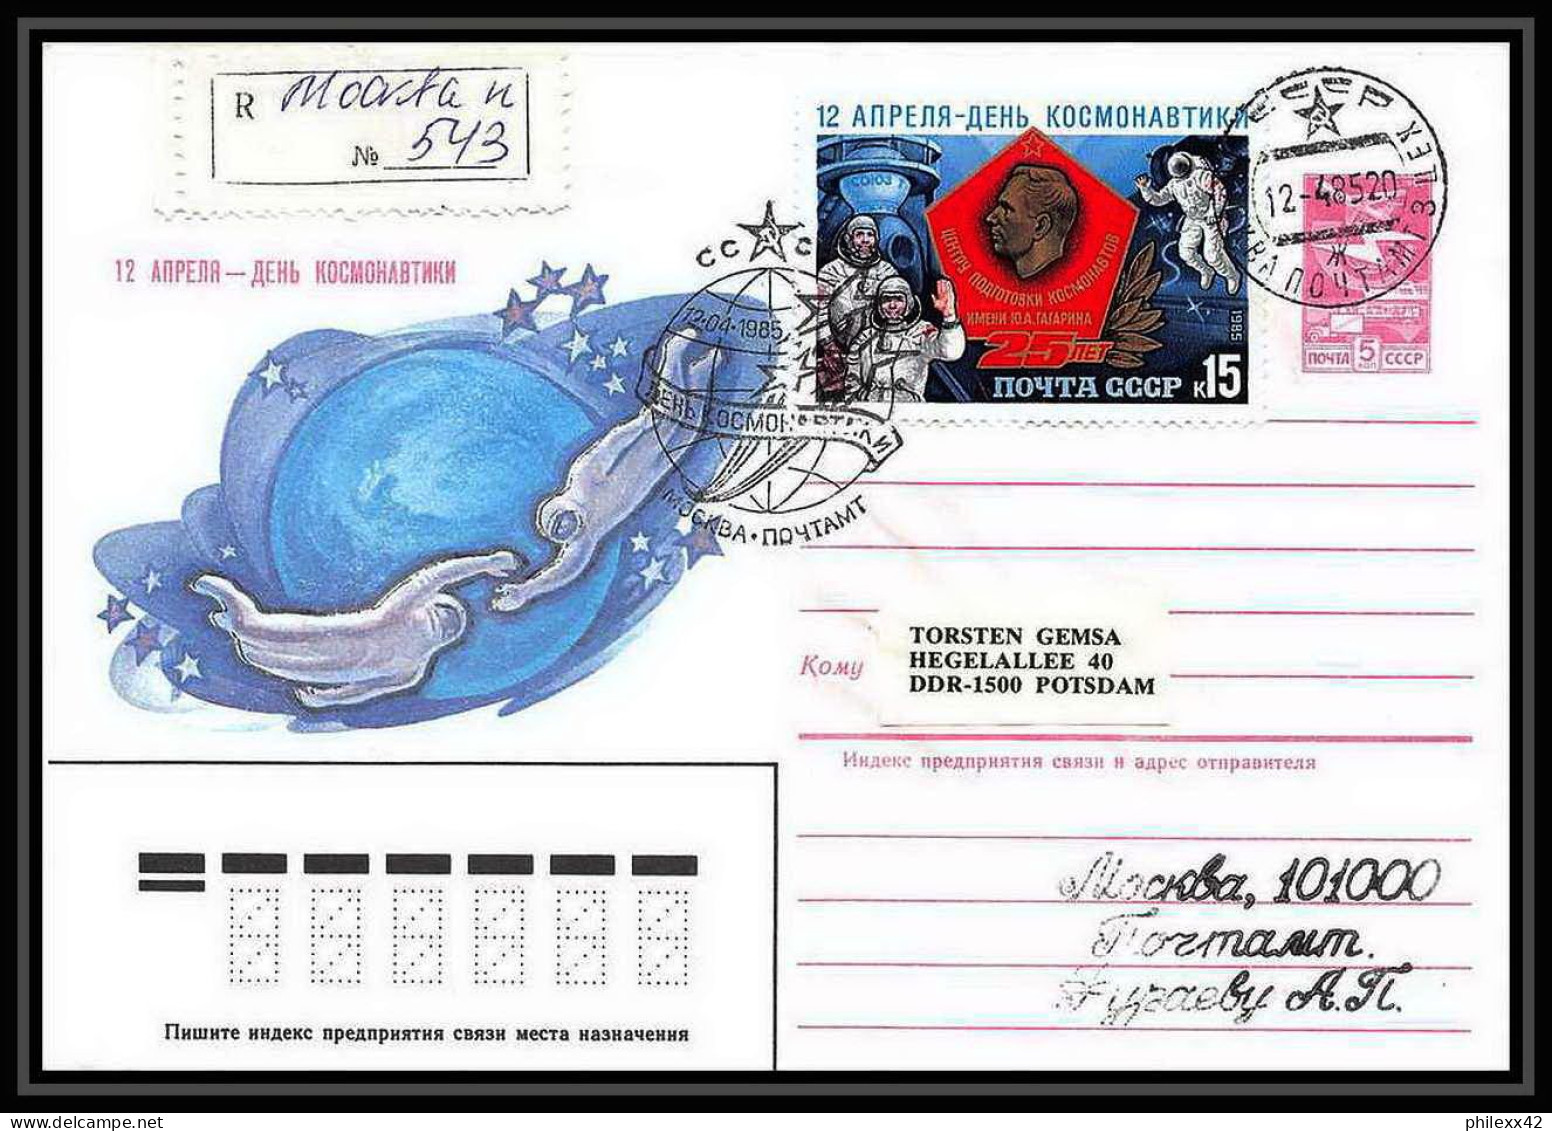 9193/ Espace (space Raumfahrt) Entier Postal (Stamped Stationery) 12/4/1985 Gagarine Gagarin (Russia Urss USSR) - Rusia & URSS